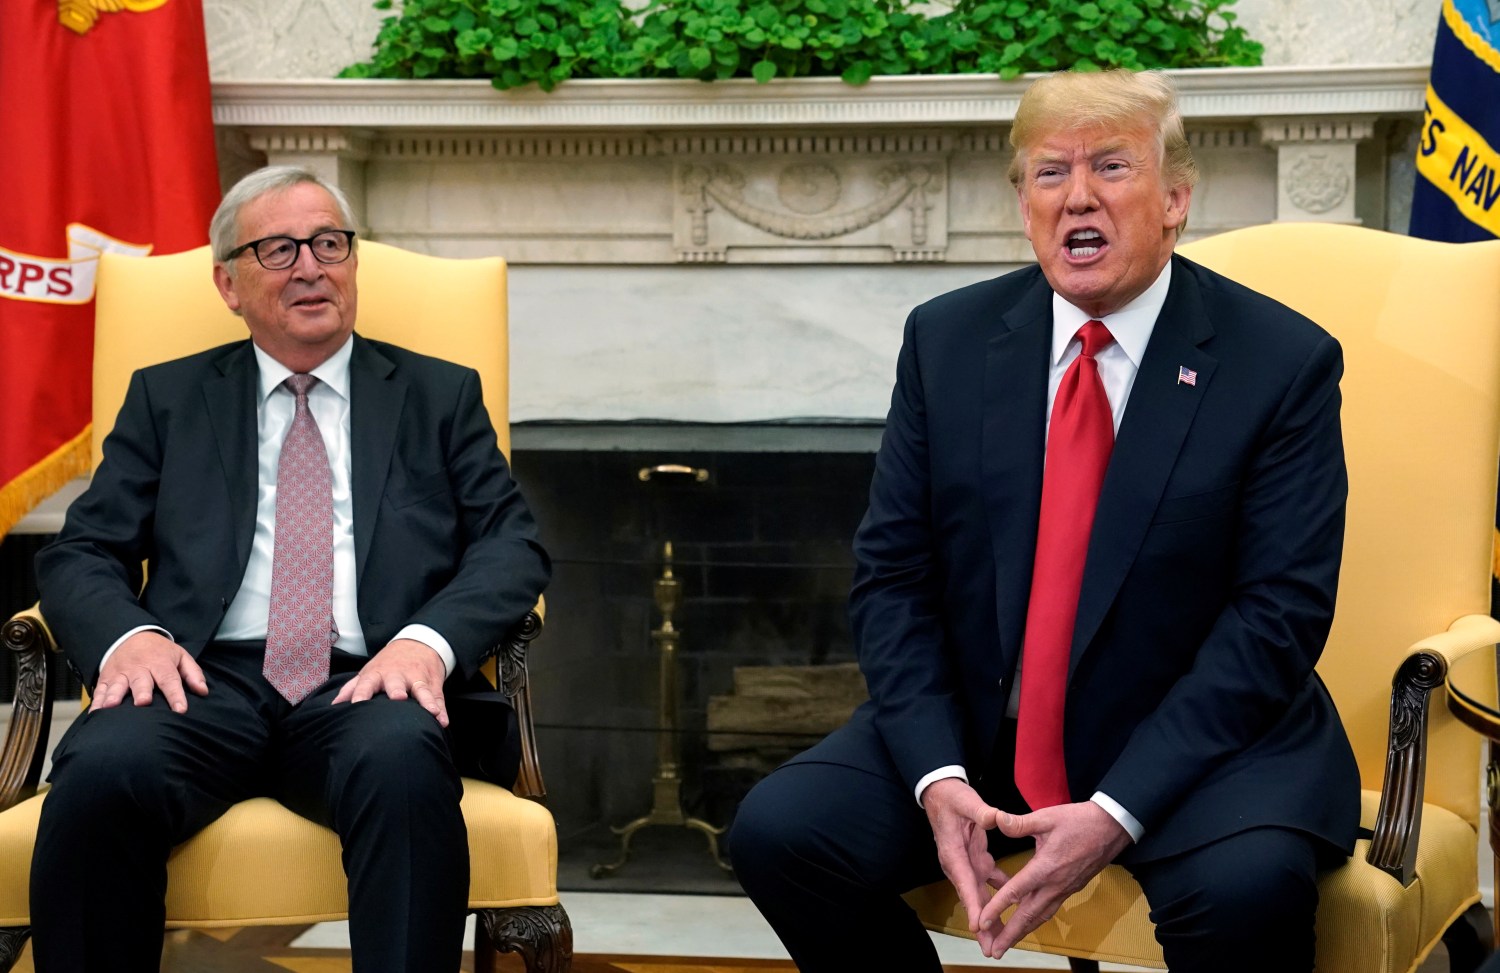 European Commission President Jean-Claude Juncker and U.S. President Donald Trump